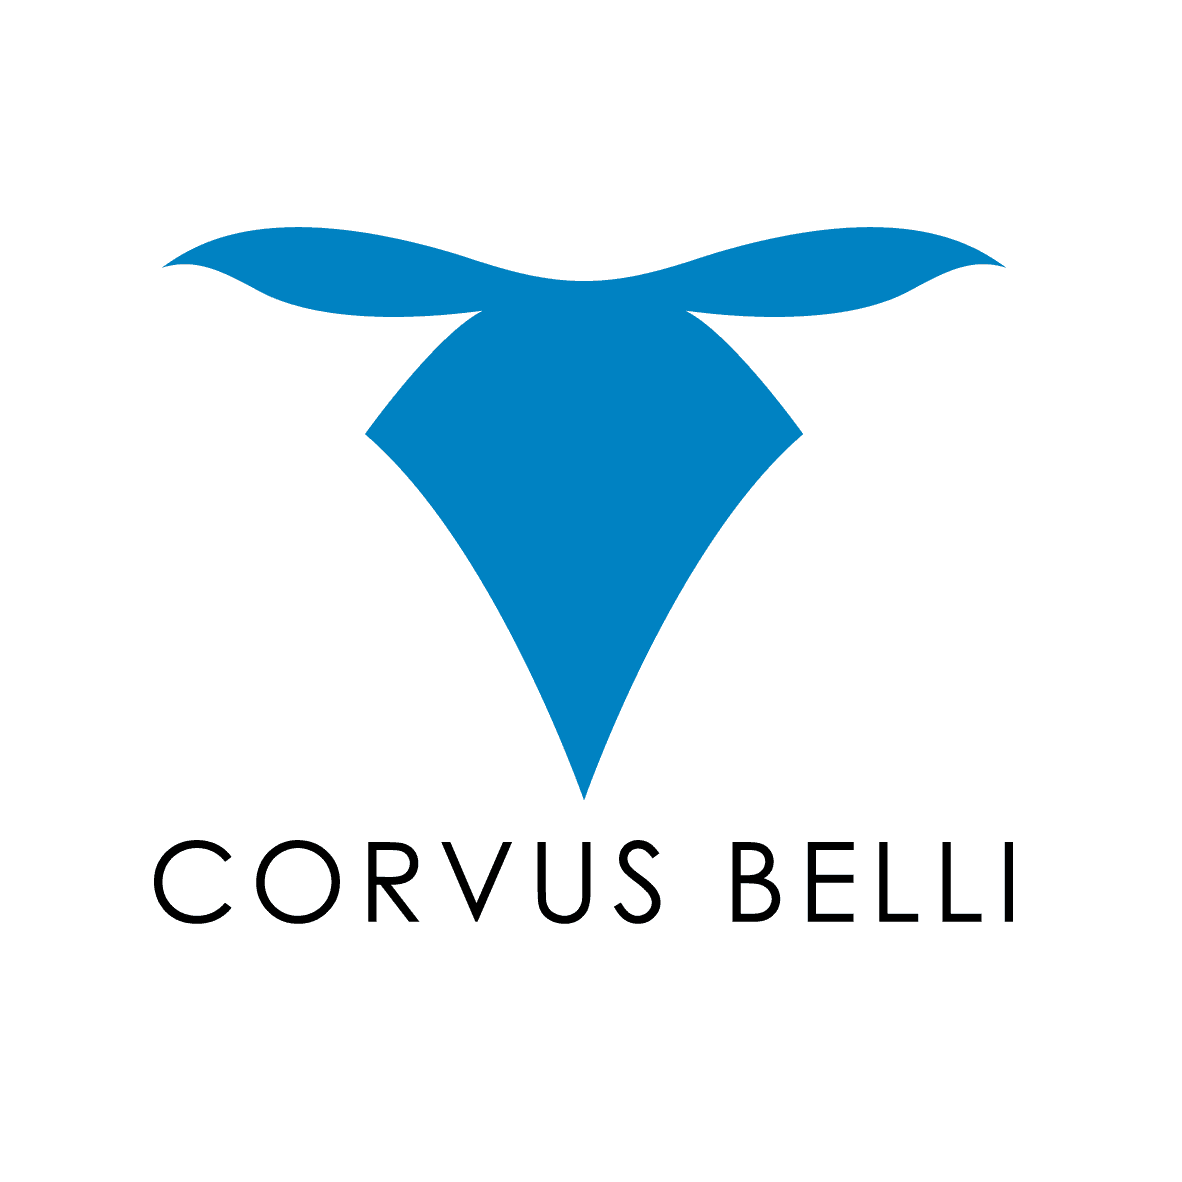 Brand: Corvus Belli